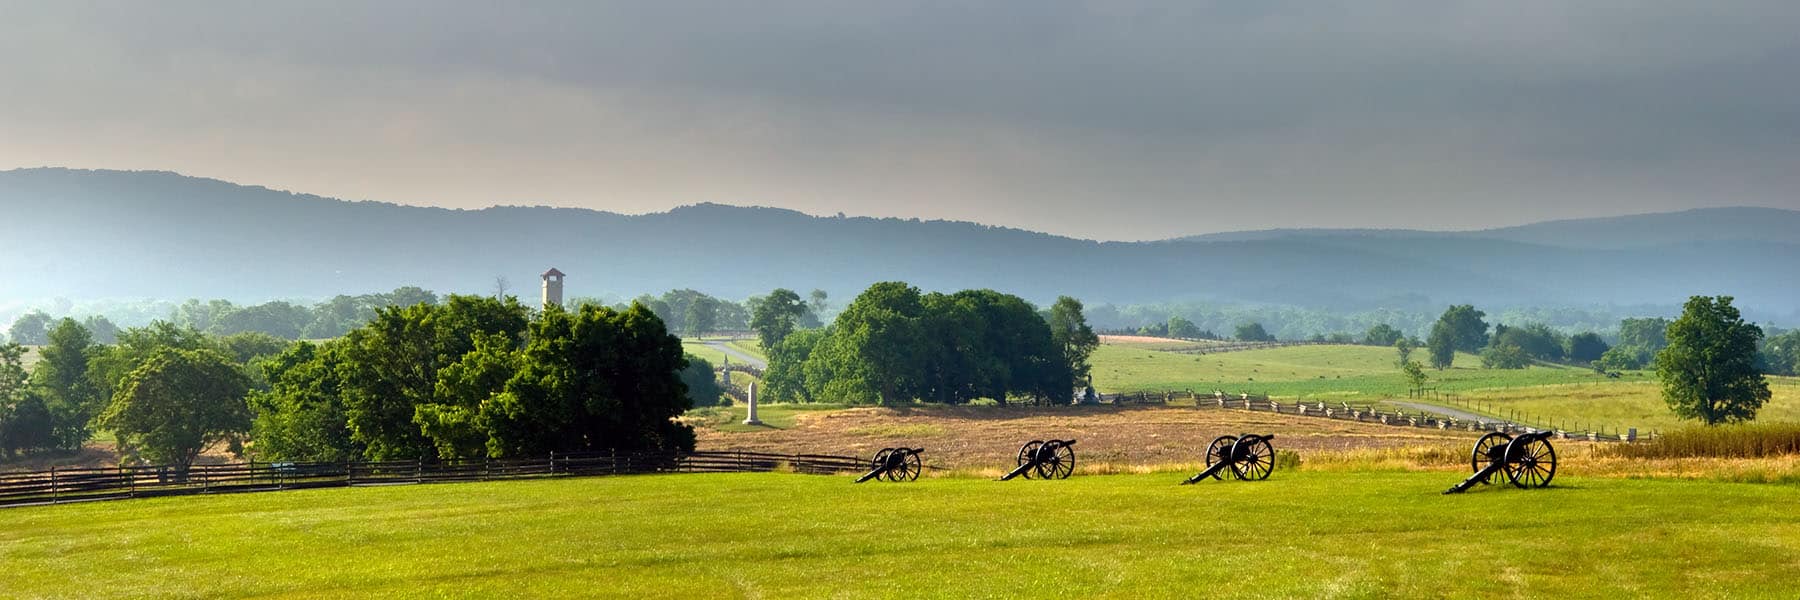 Antietam Battlefield Panorama